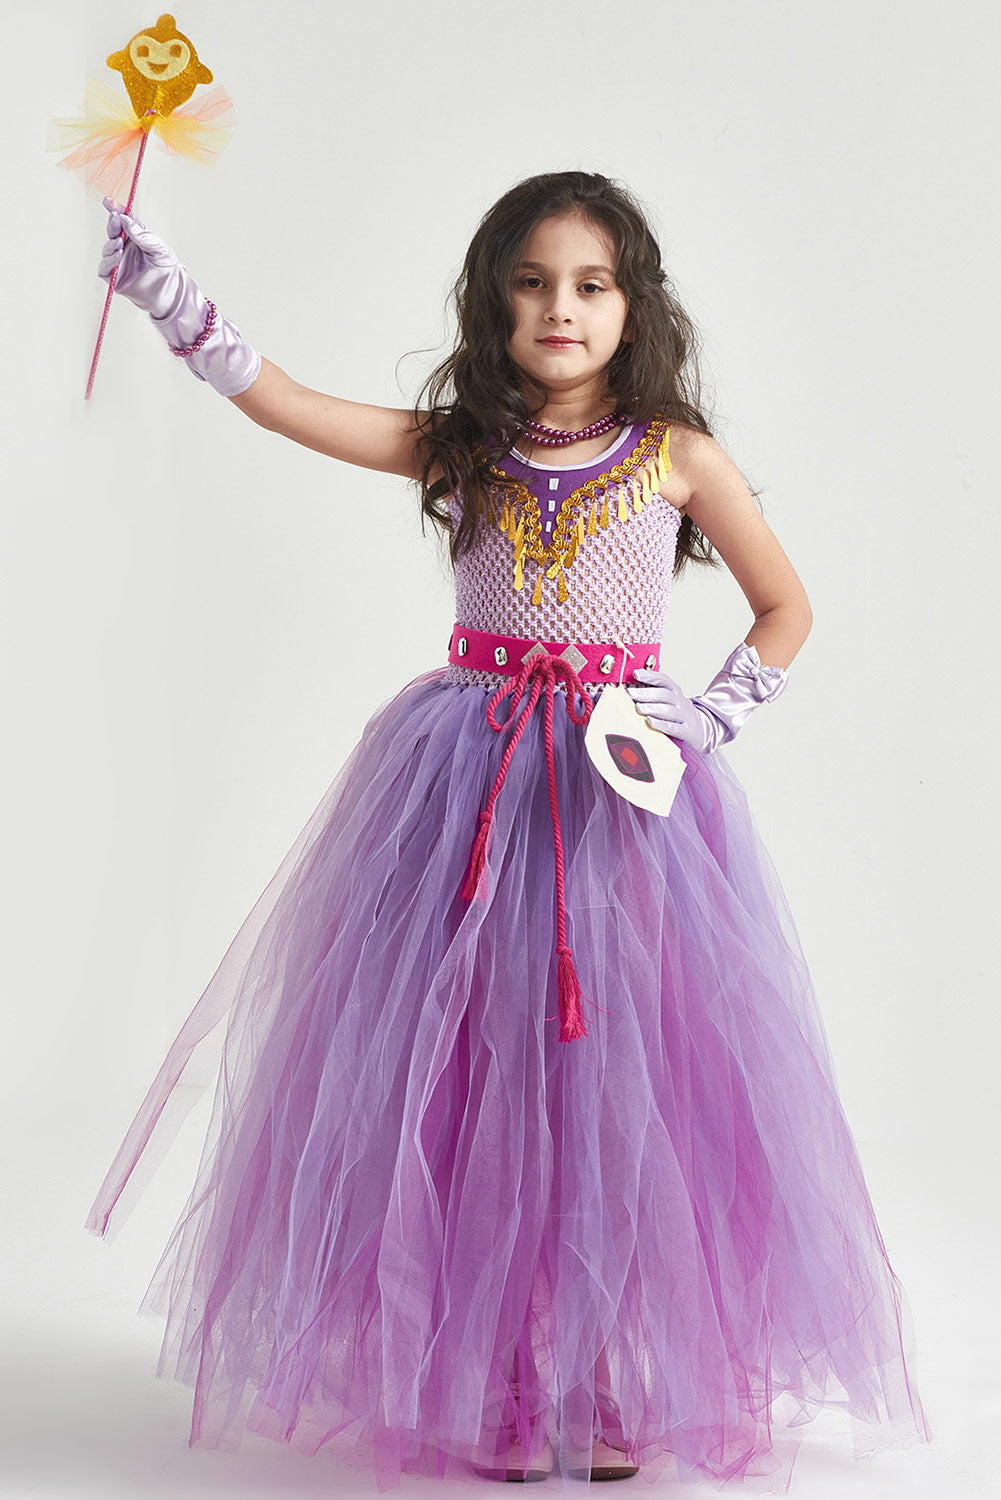 Kinder Mädchen Film Wish 2023 -Asha Cosplay tutu Kleid Kostüm Outfits